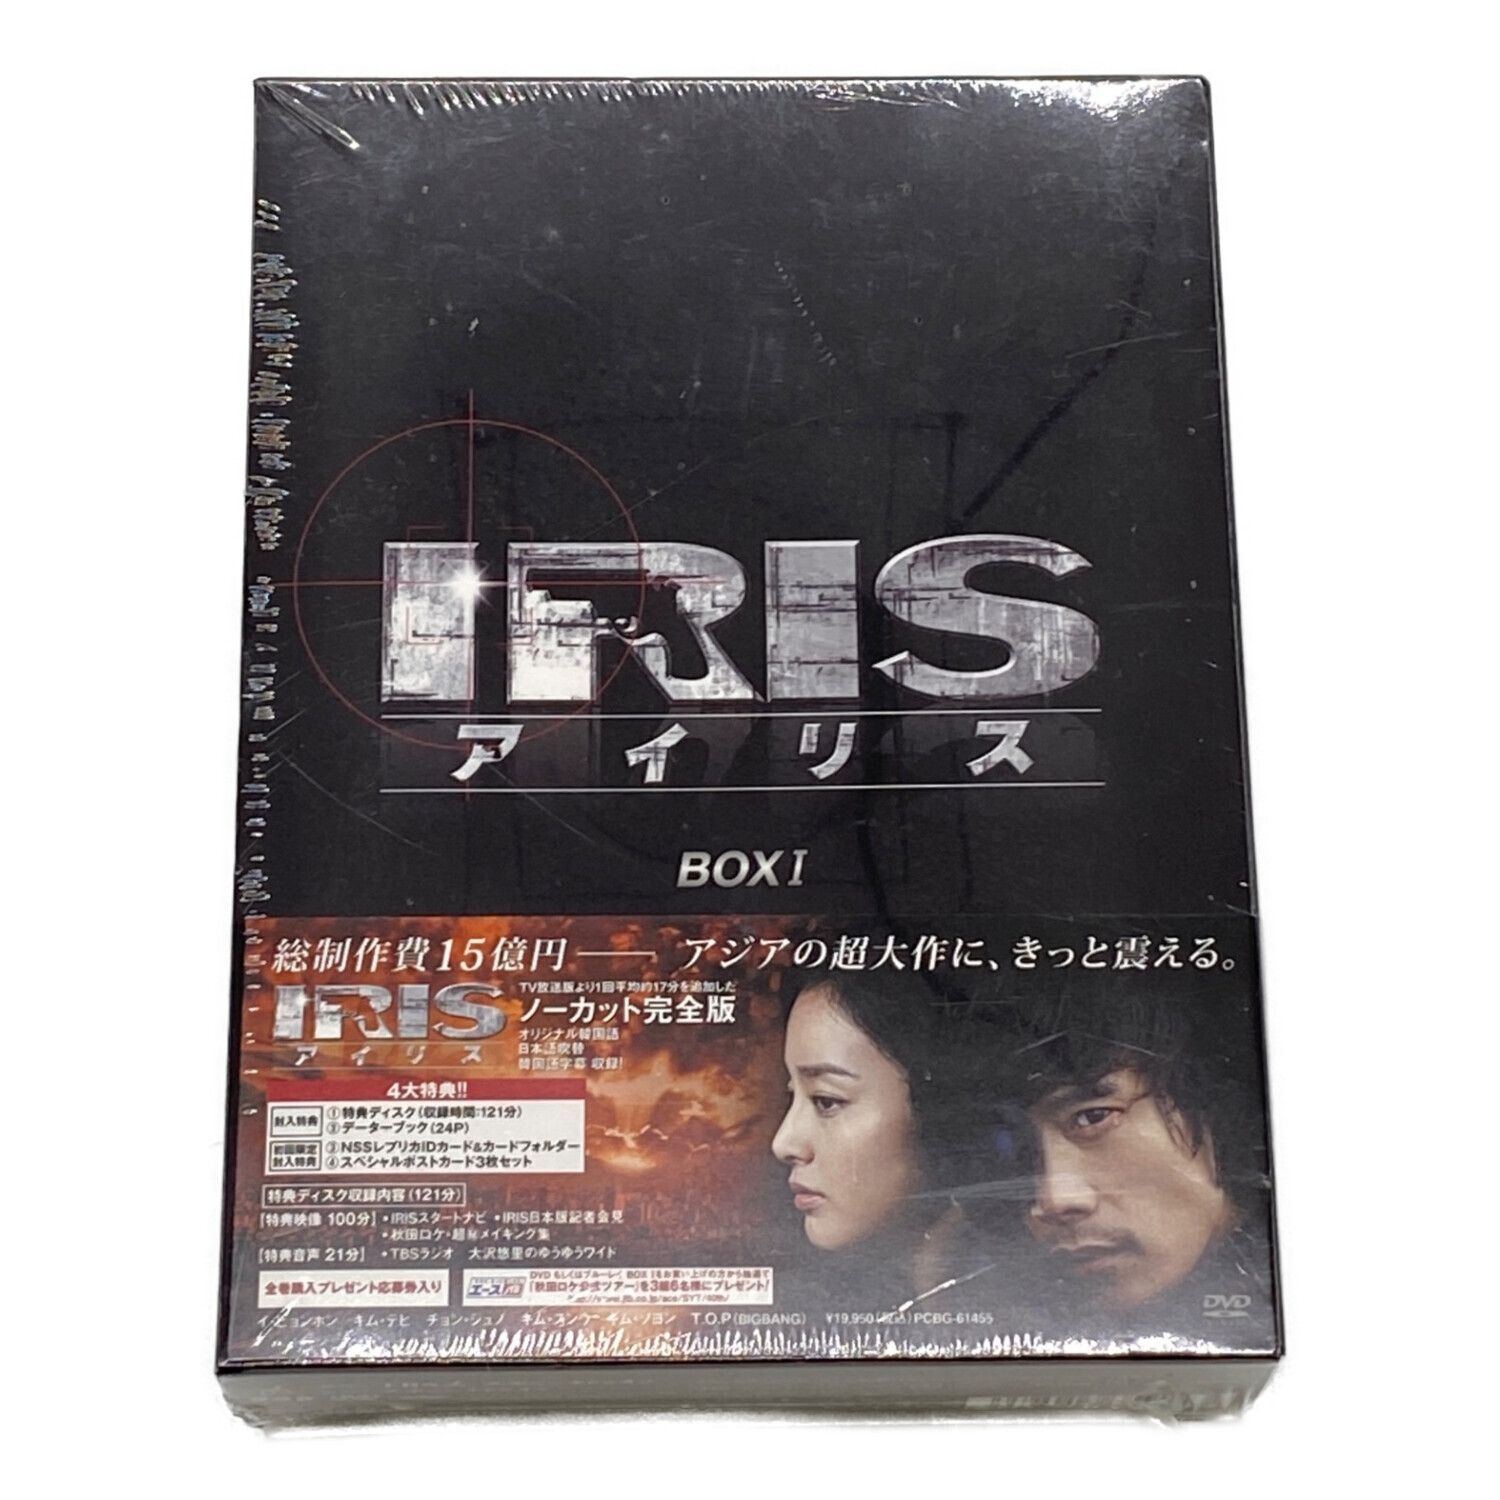 IRIS ノーカット完全版 Blu-ray BOX set - TVドラマ